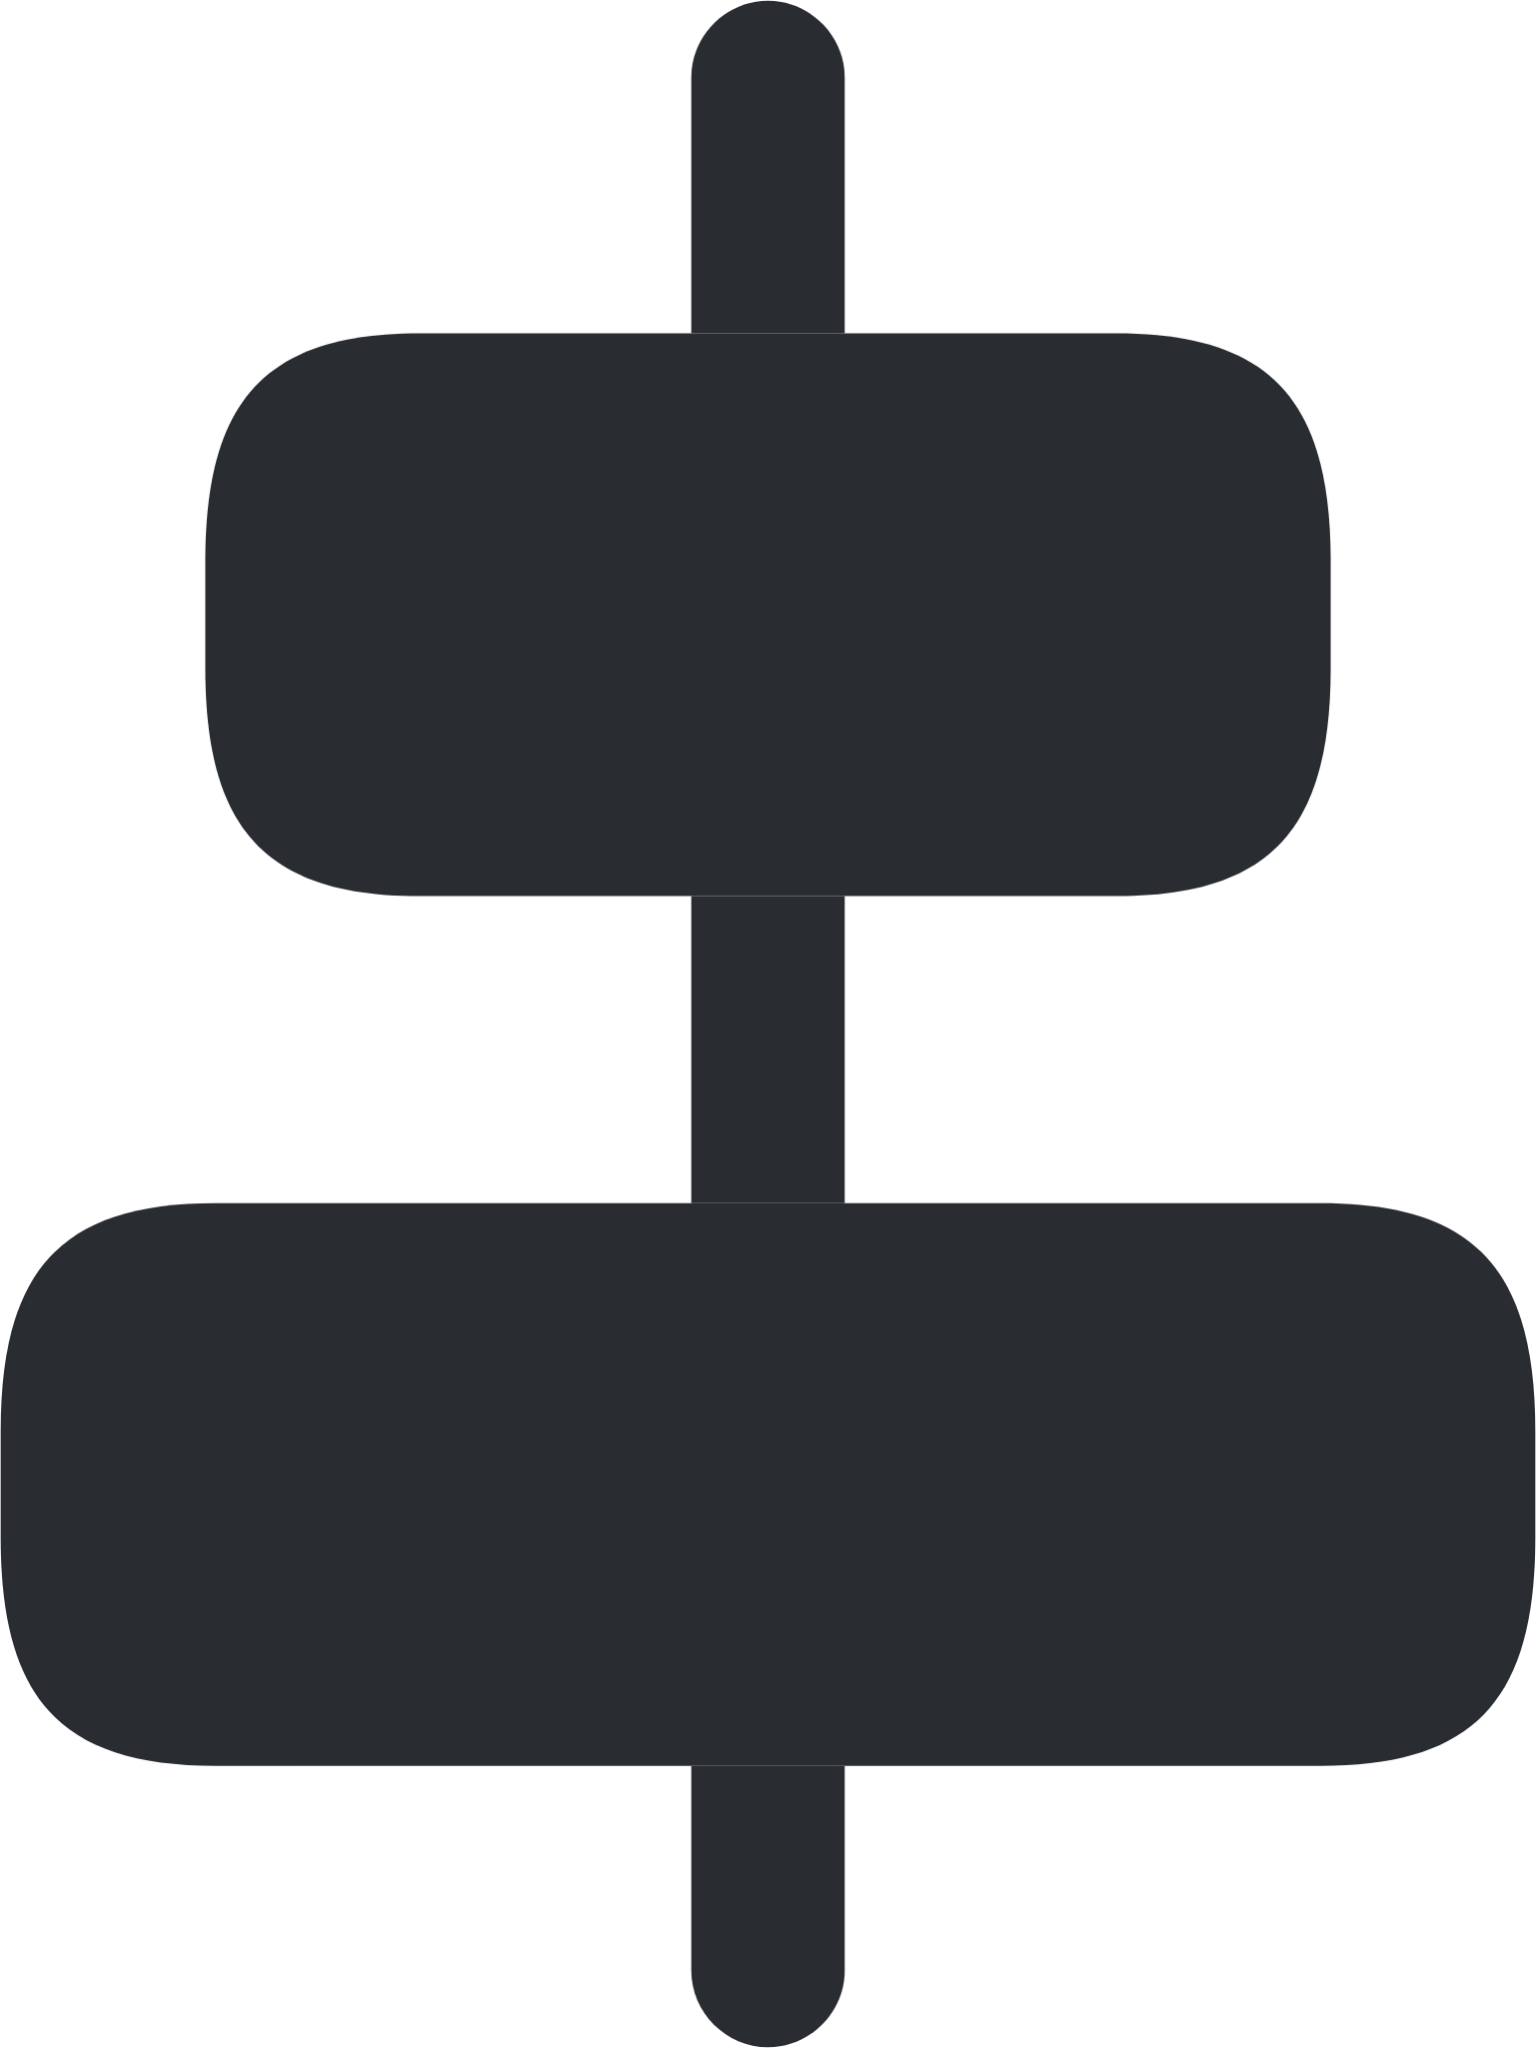 align vertically icon